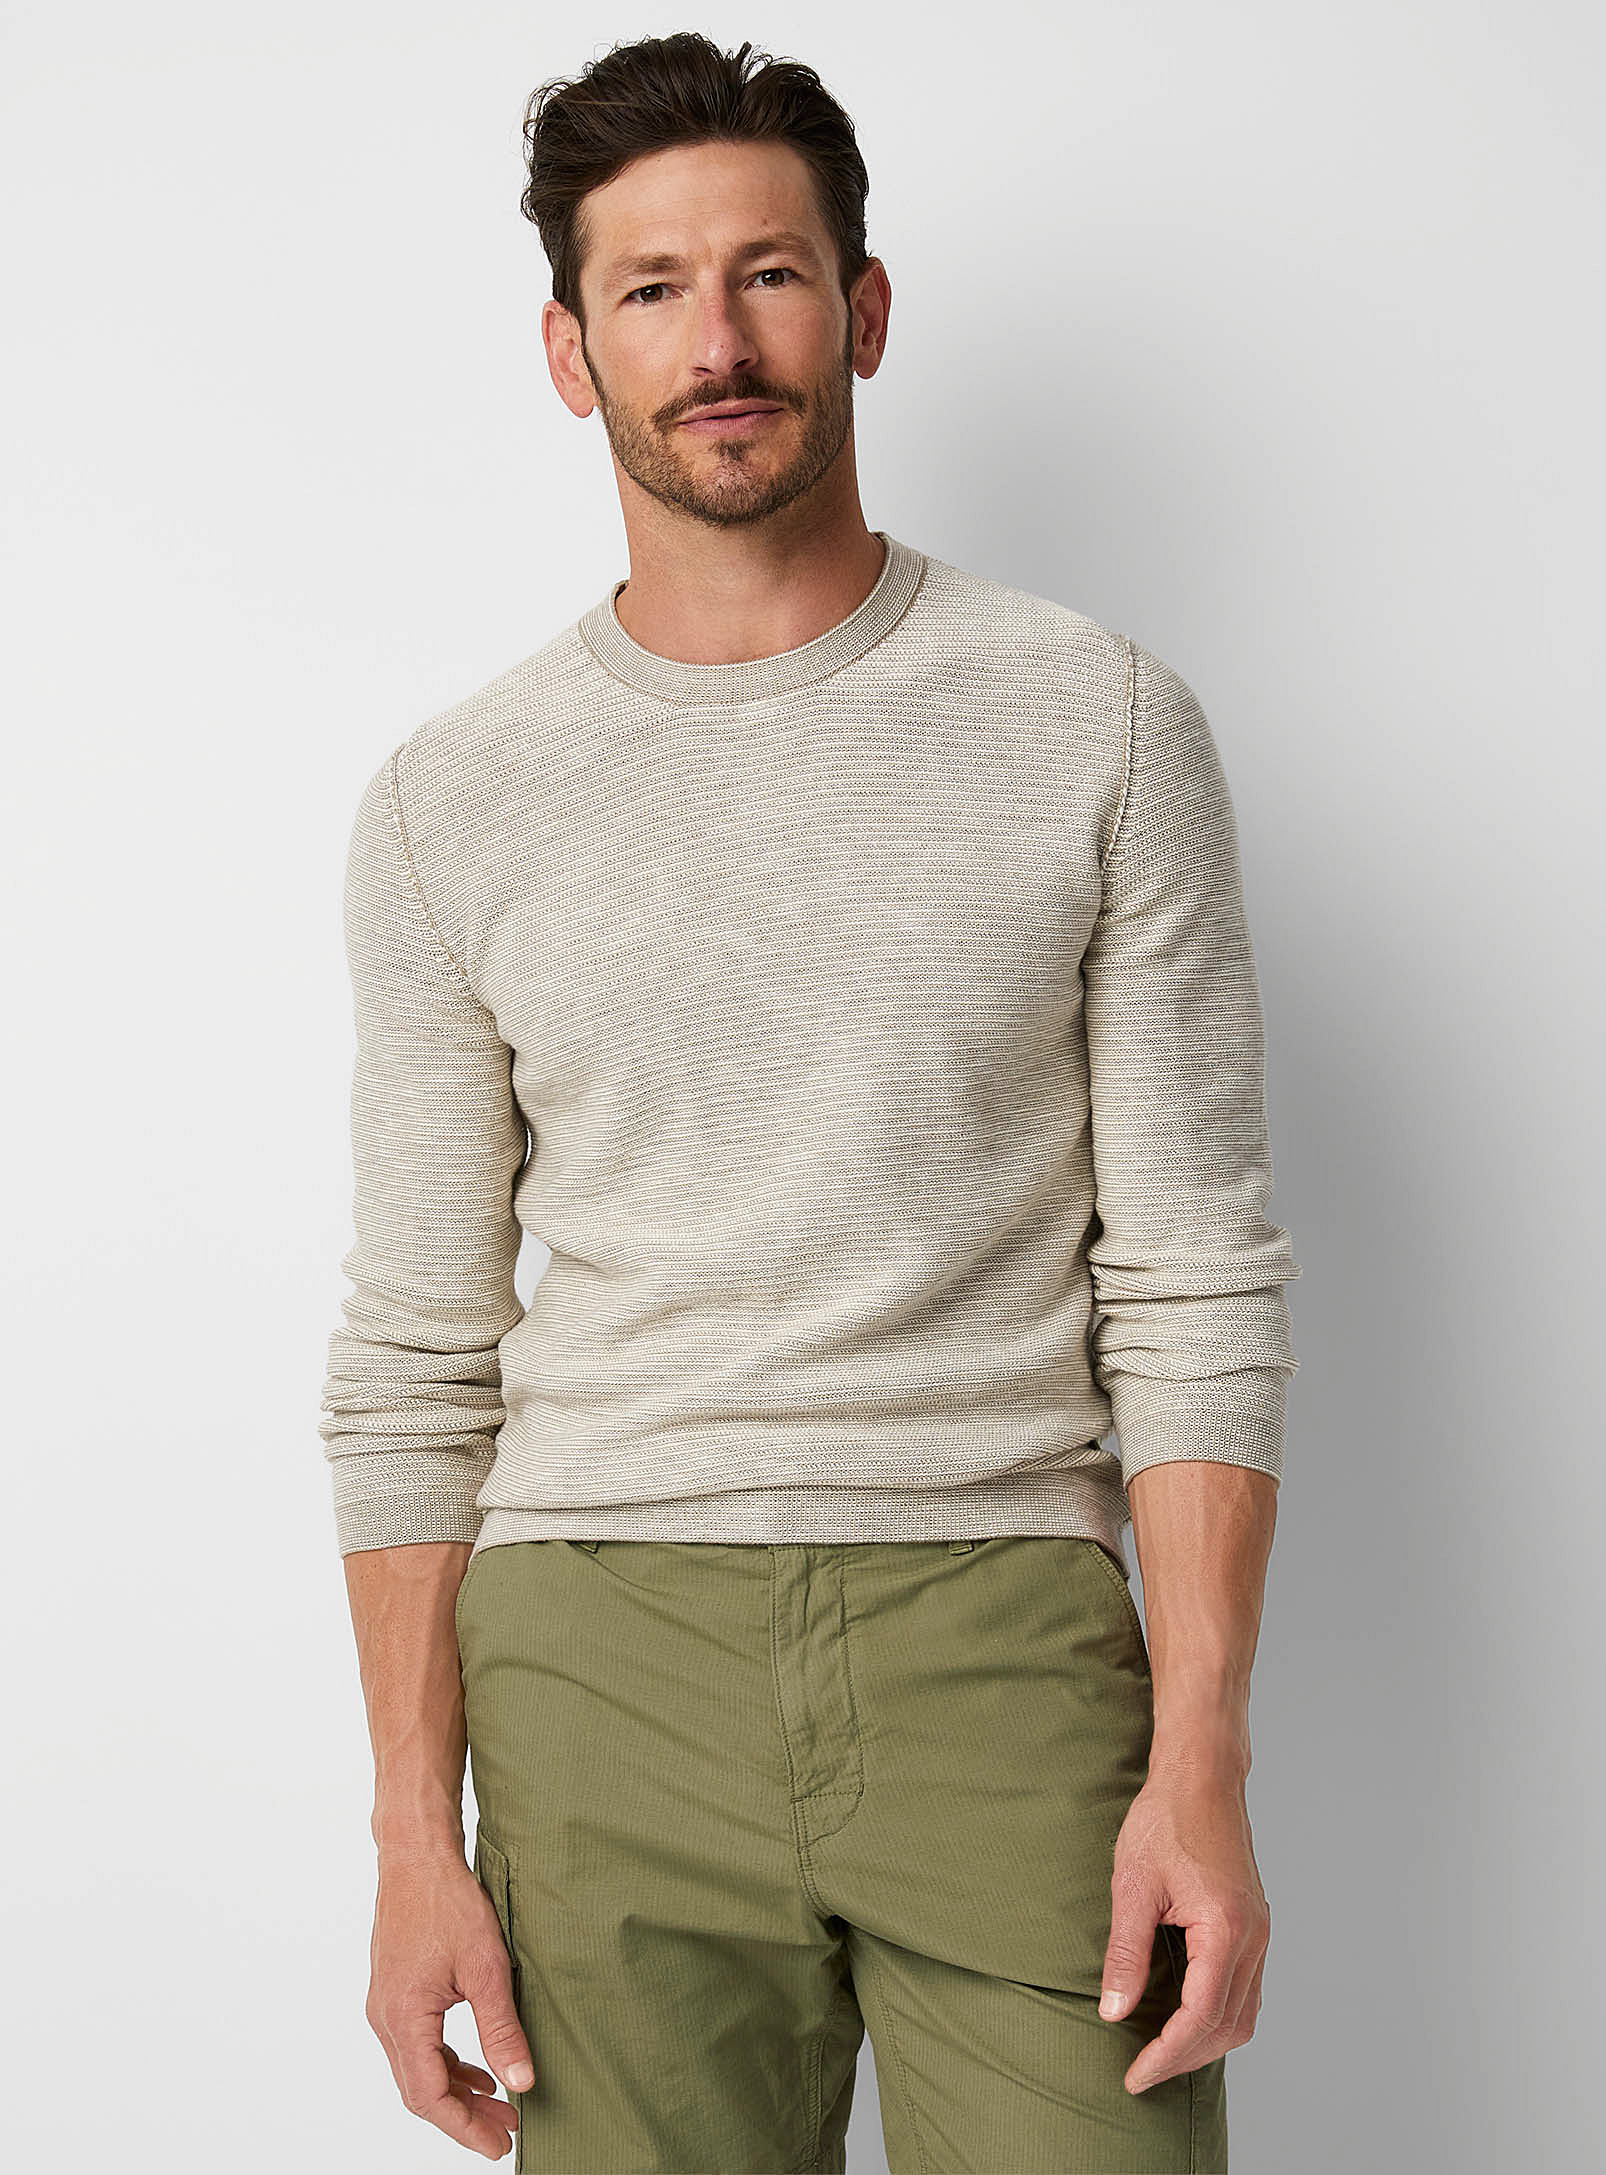 Marc O'Polo Shirt - Men's Linen-blend two-tone sweater